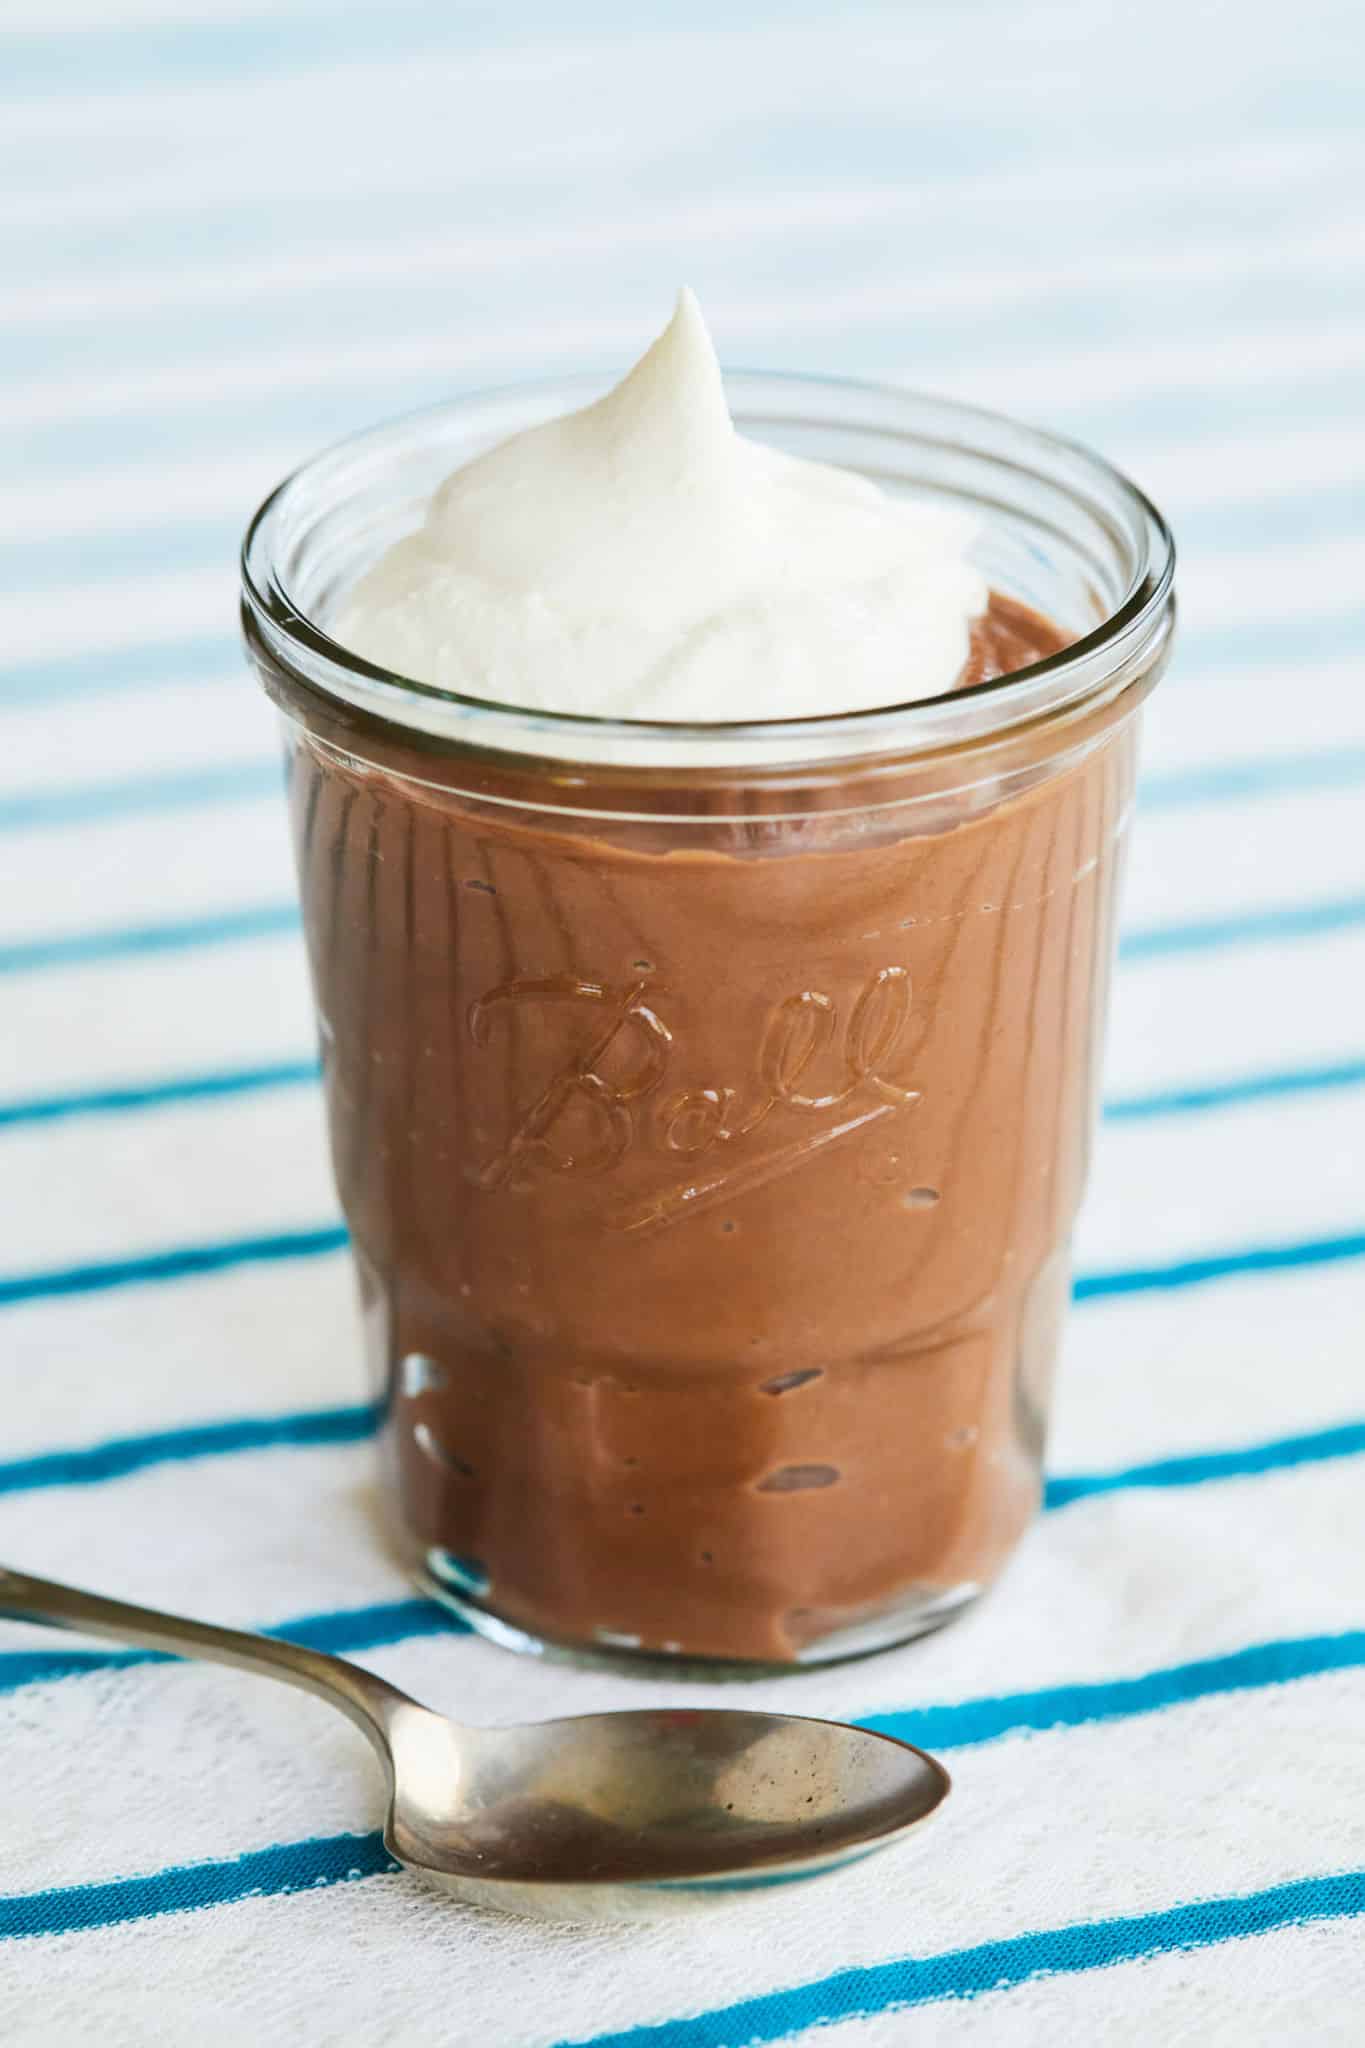 A single jar of creamy chocolate pudding.